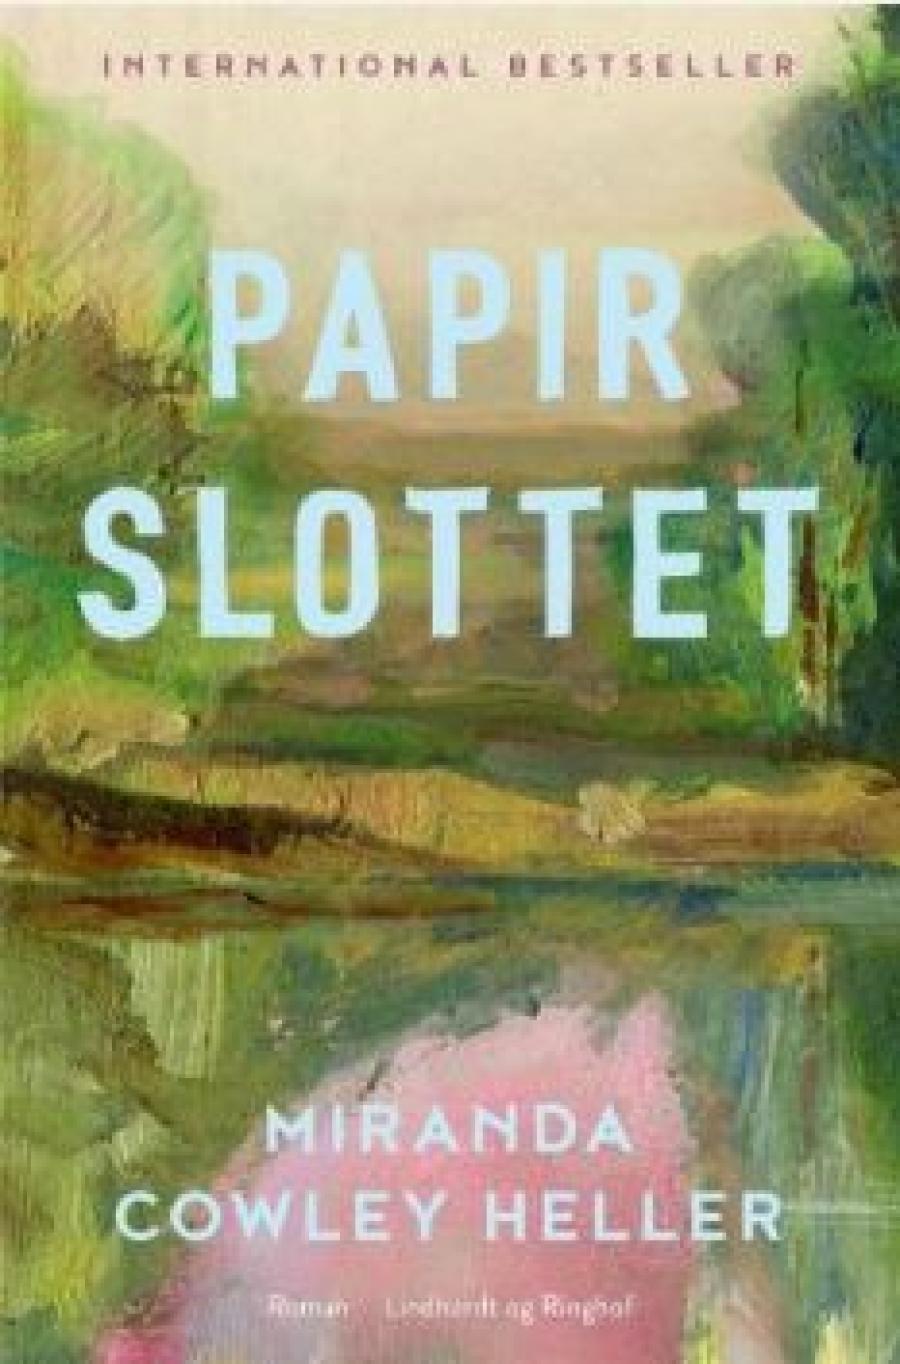 Miranda Cowley Heller, "Papirslottet" 